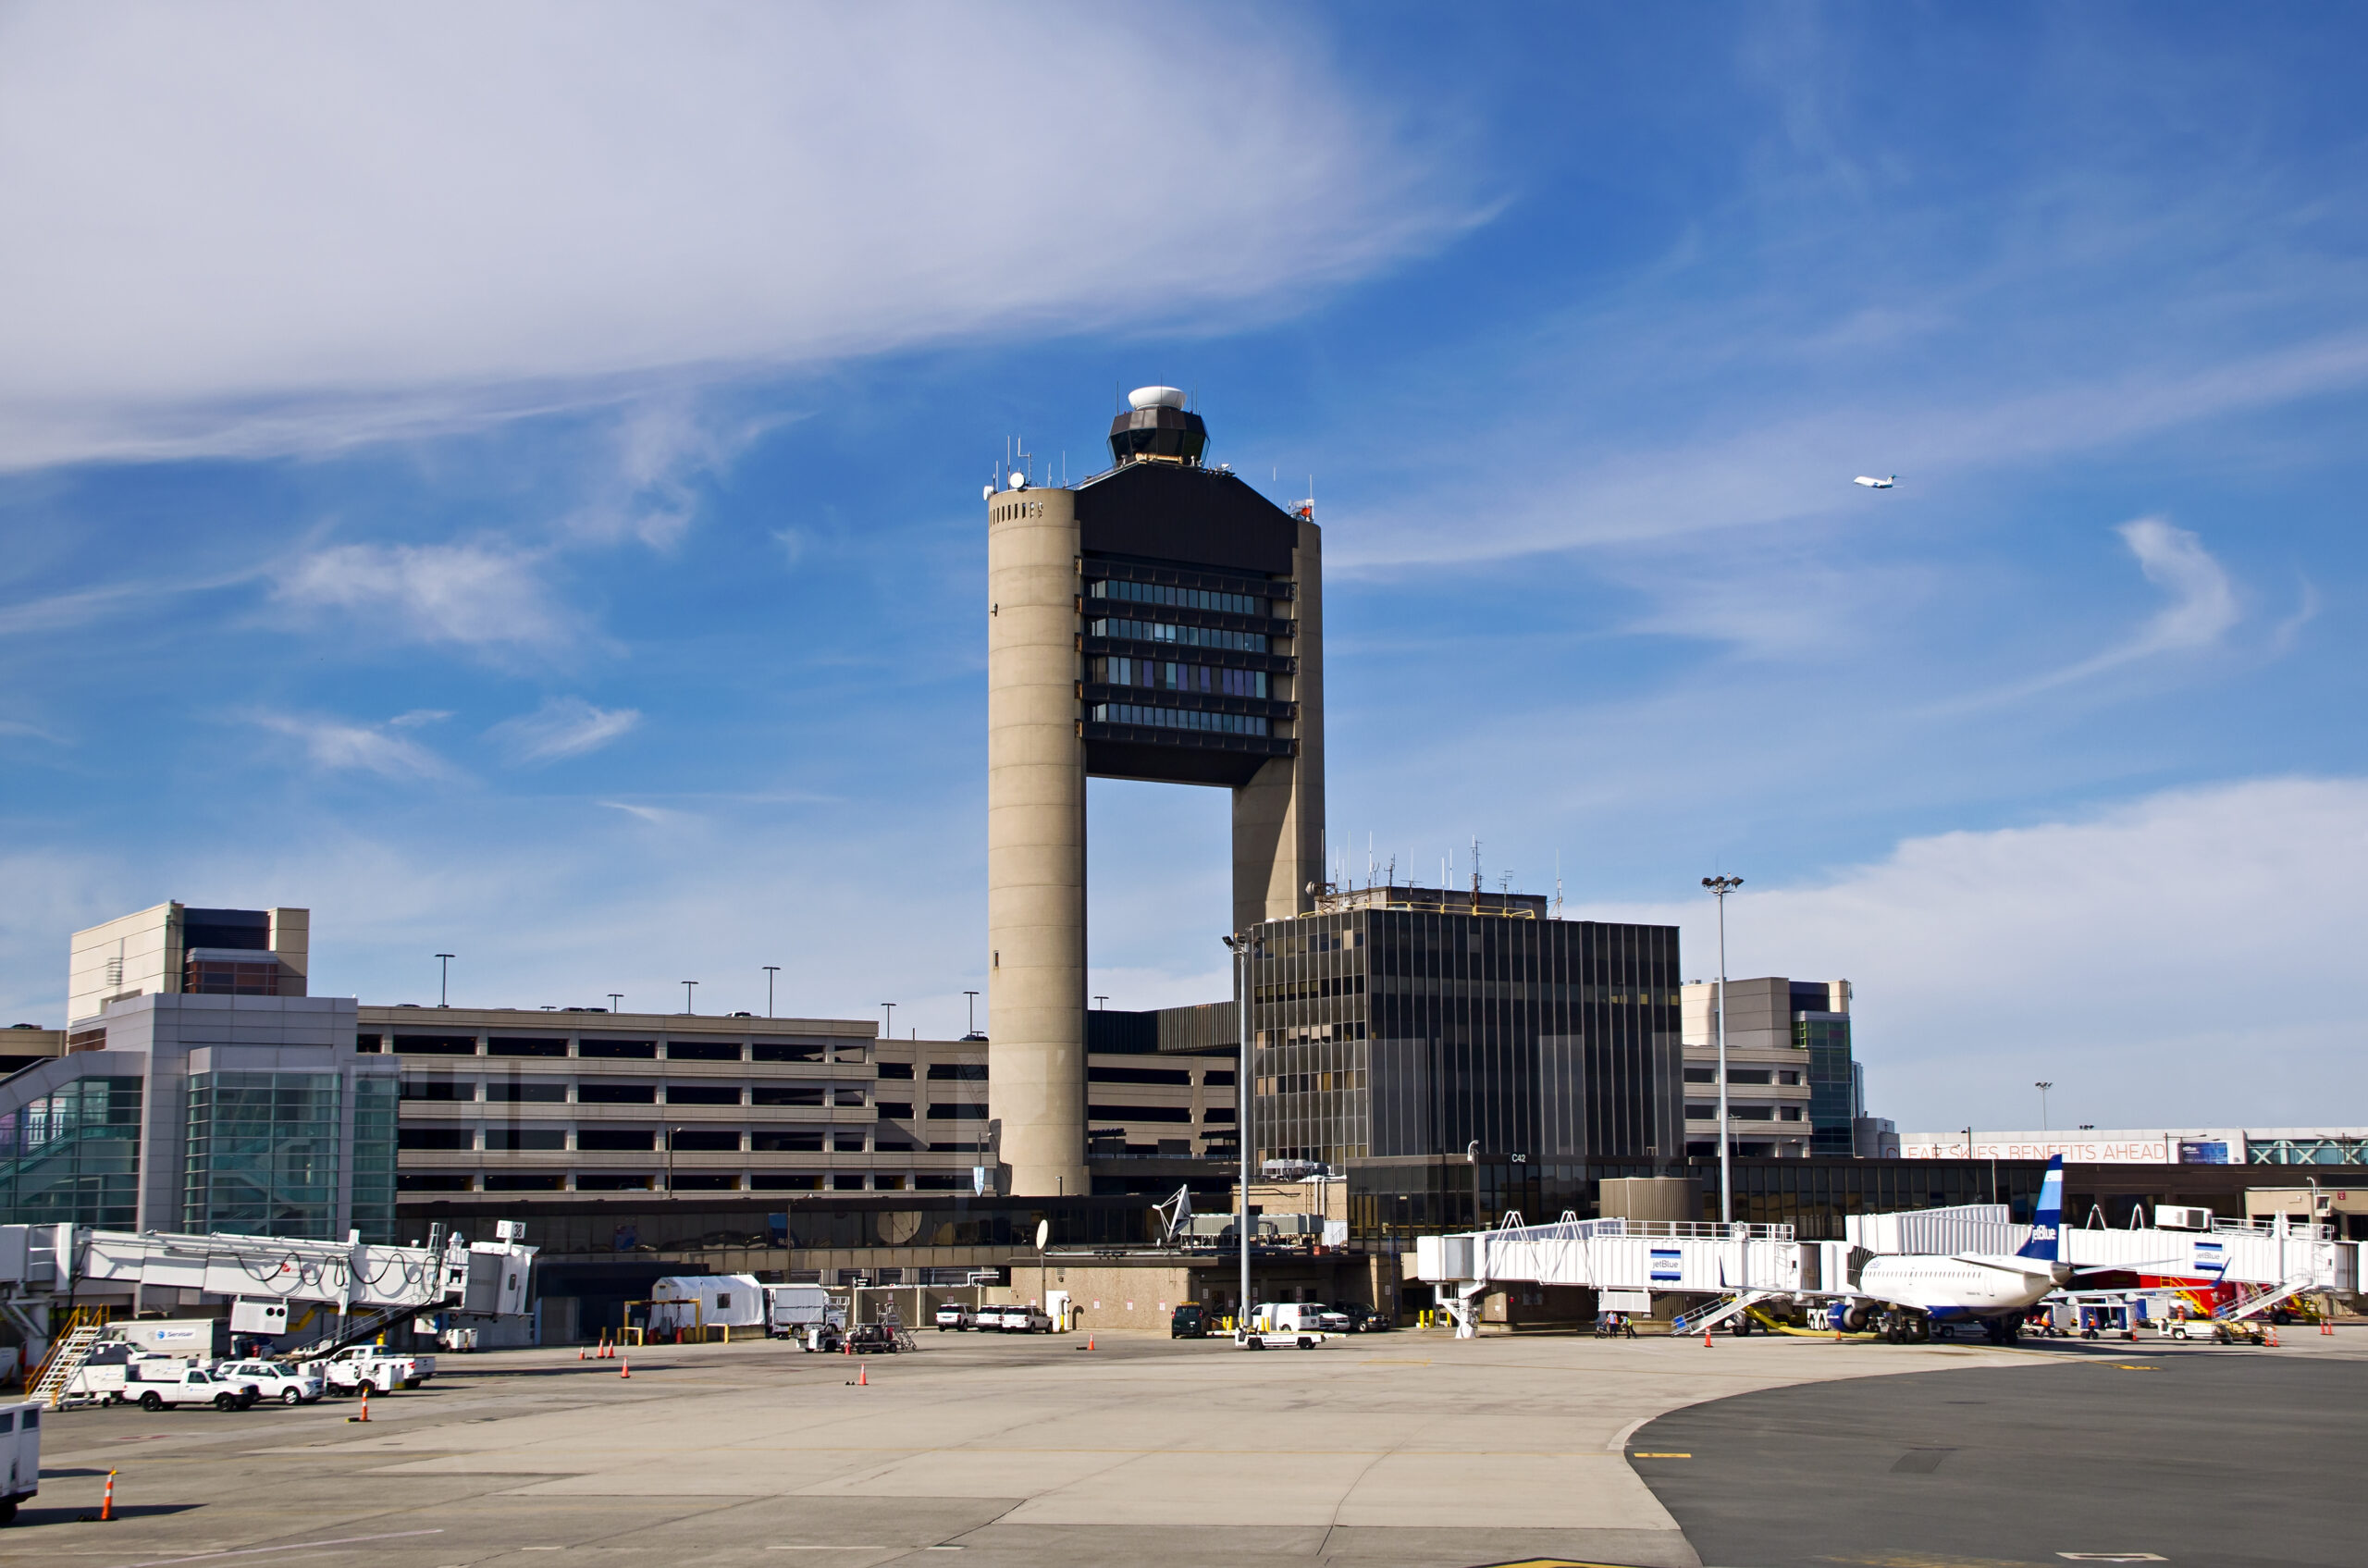 Boston Logan First North American Airport to Achieve Health